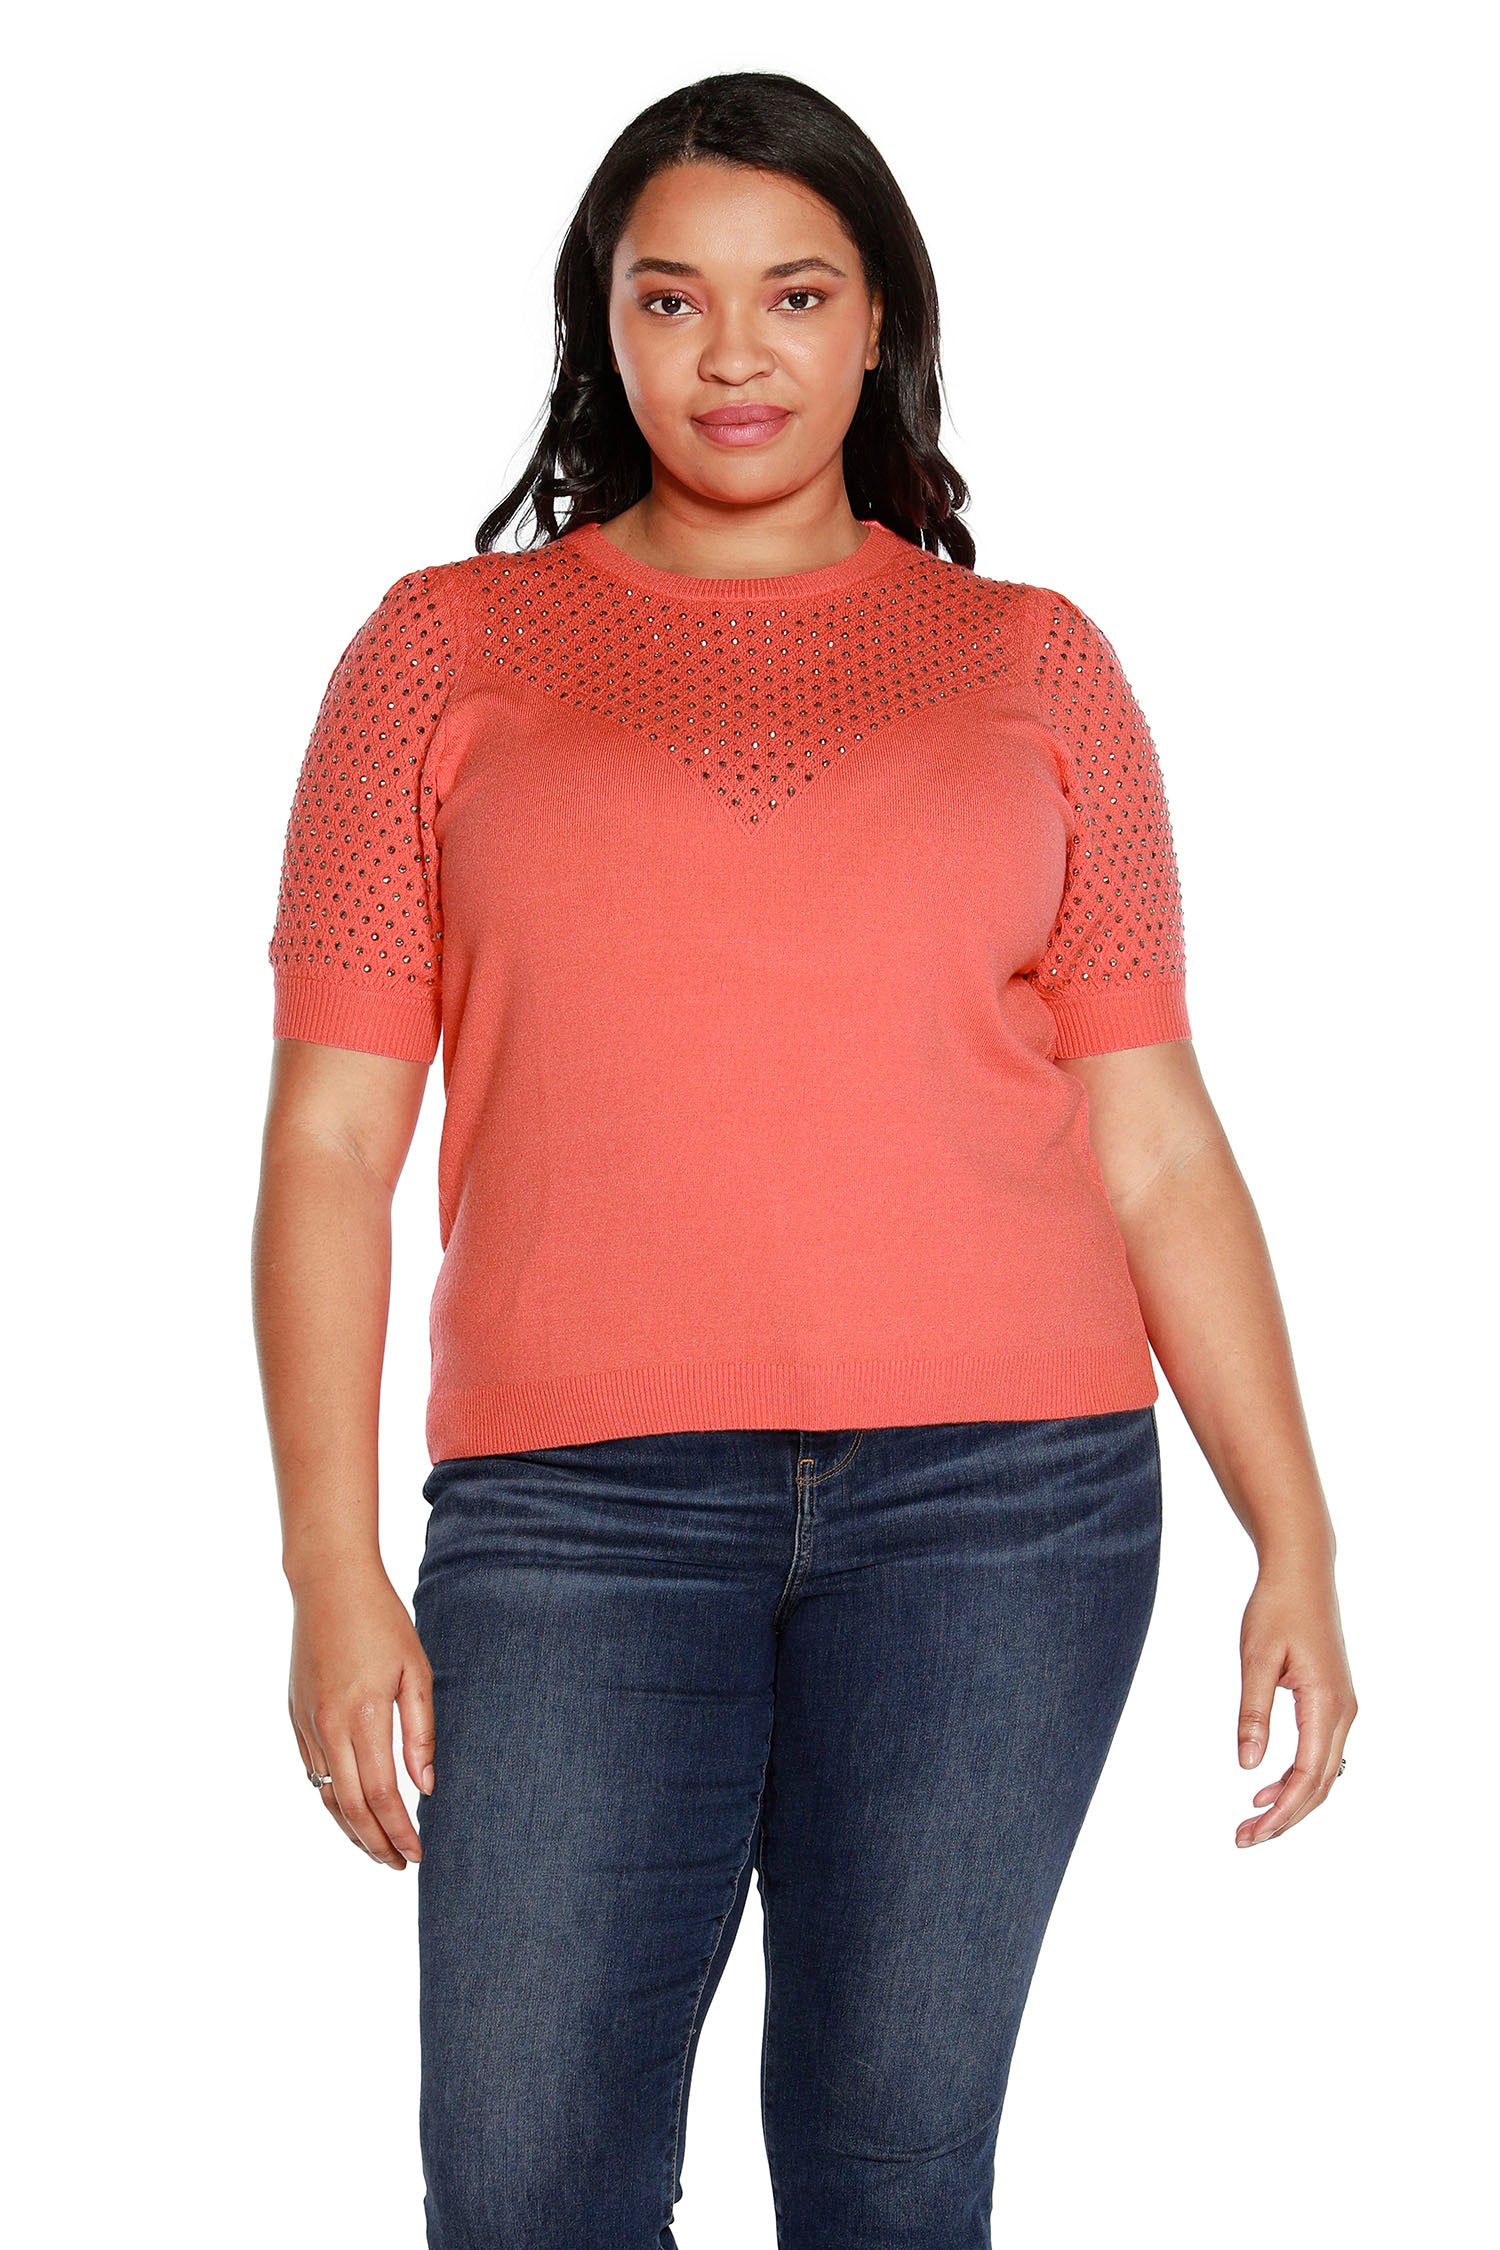 Women’s Rhinestone Embellished Sweater with Puff Sleeve | Curvy